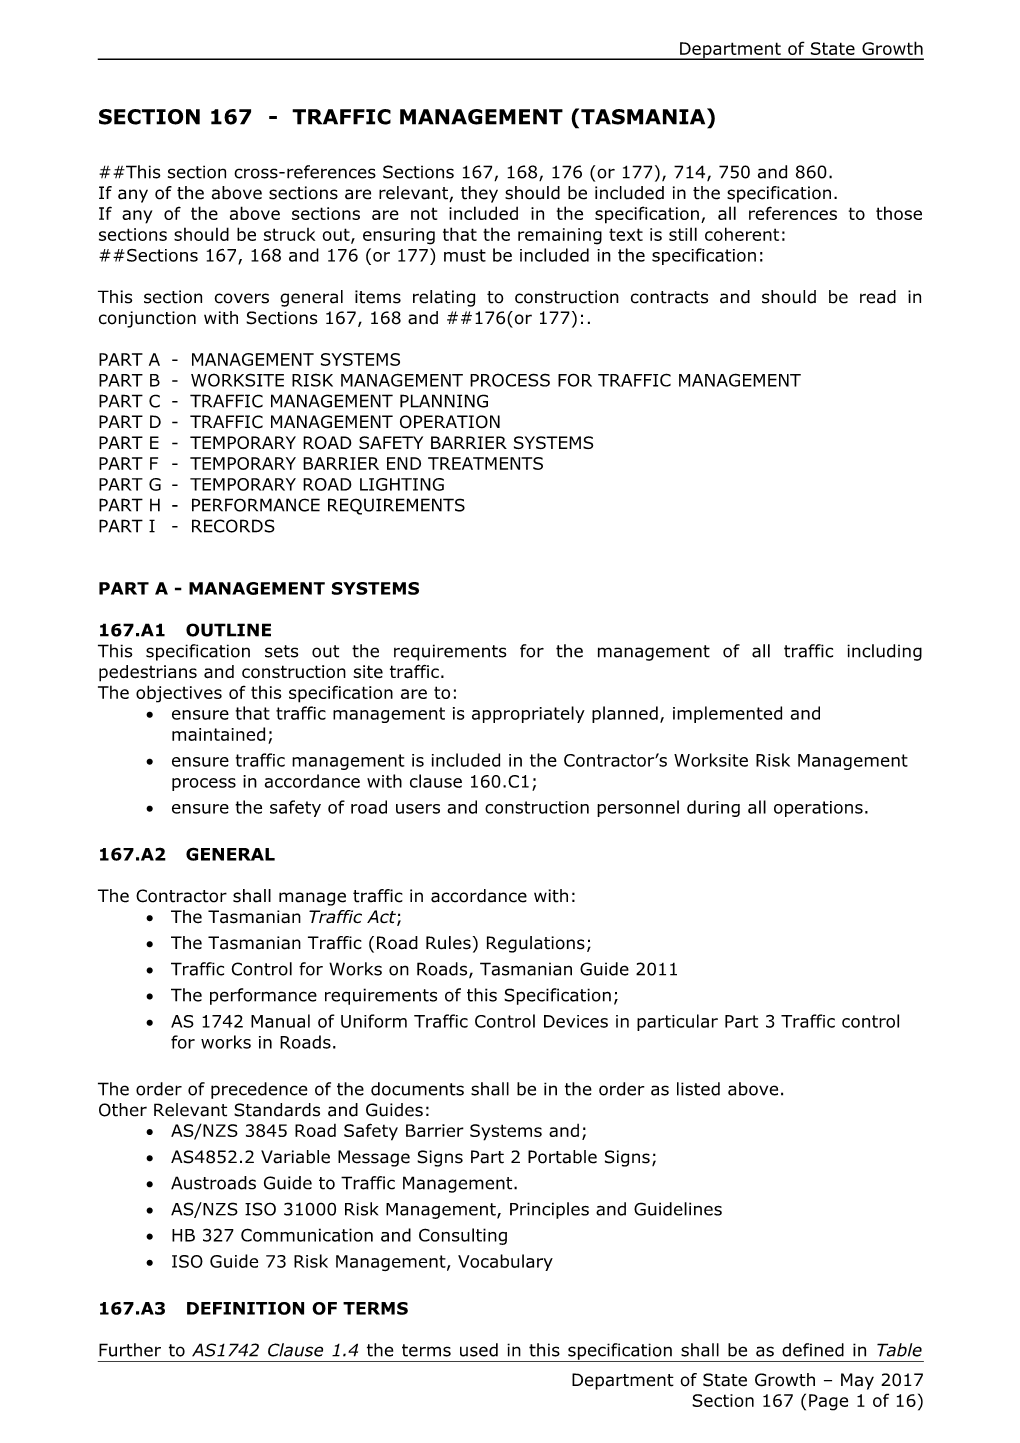 Section167traffic Management (Tasmania)